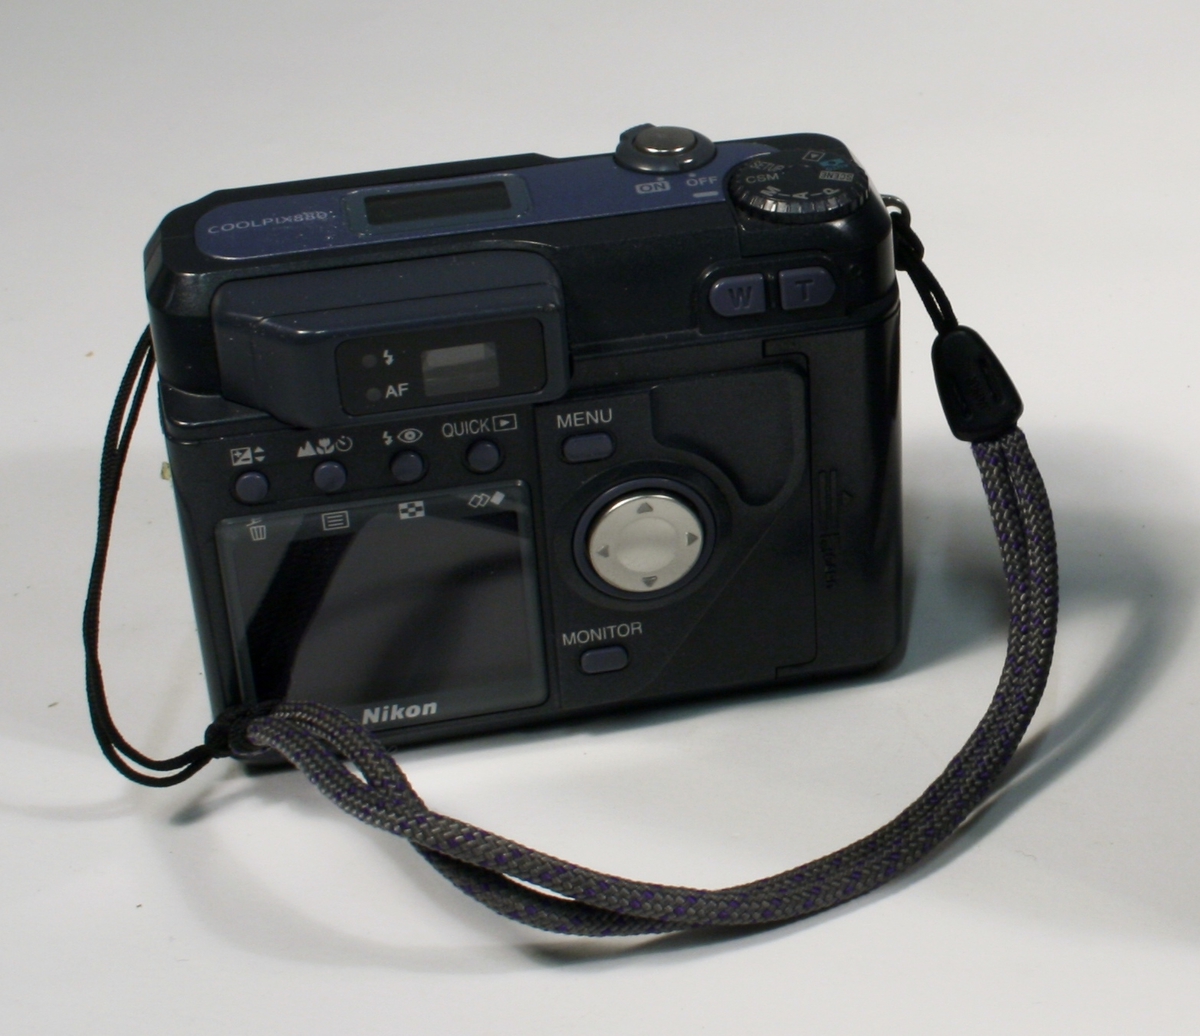 Nikon coolpix 880 digitalkamera med veske og bruksanvisning